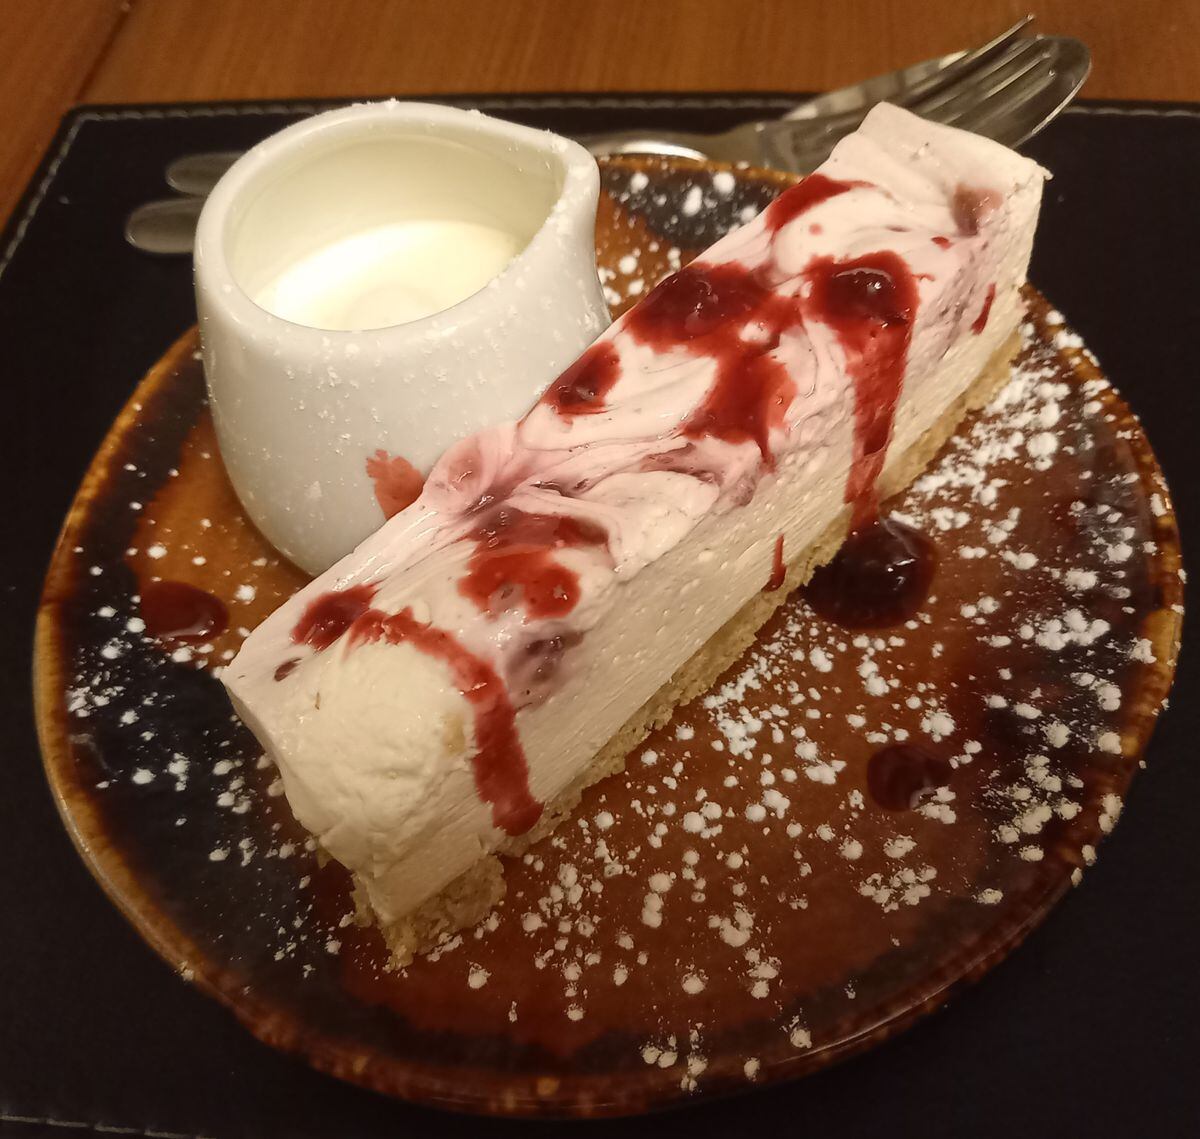 Mixed berry cheesecake 